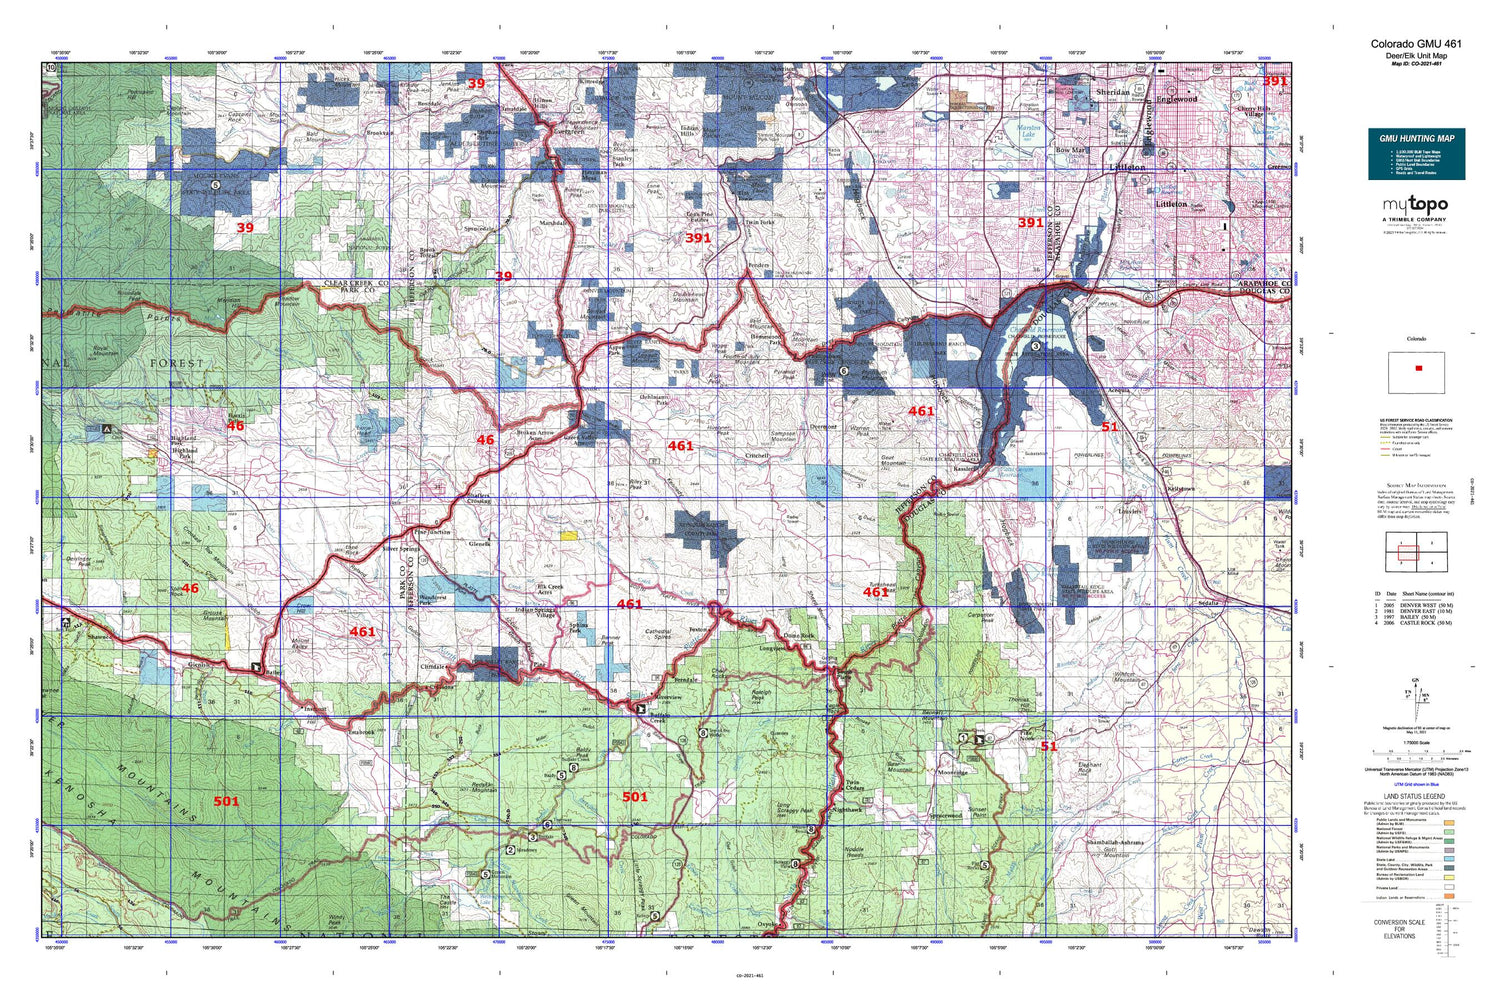 Colorado GMU 461 Map Image